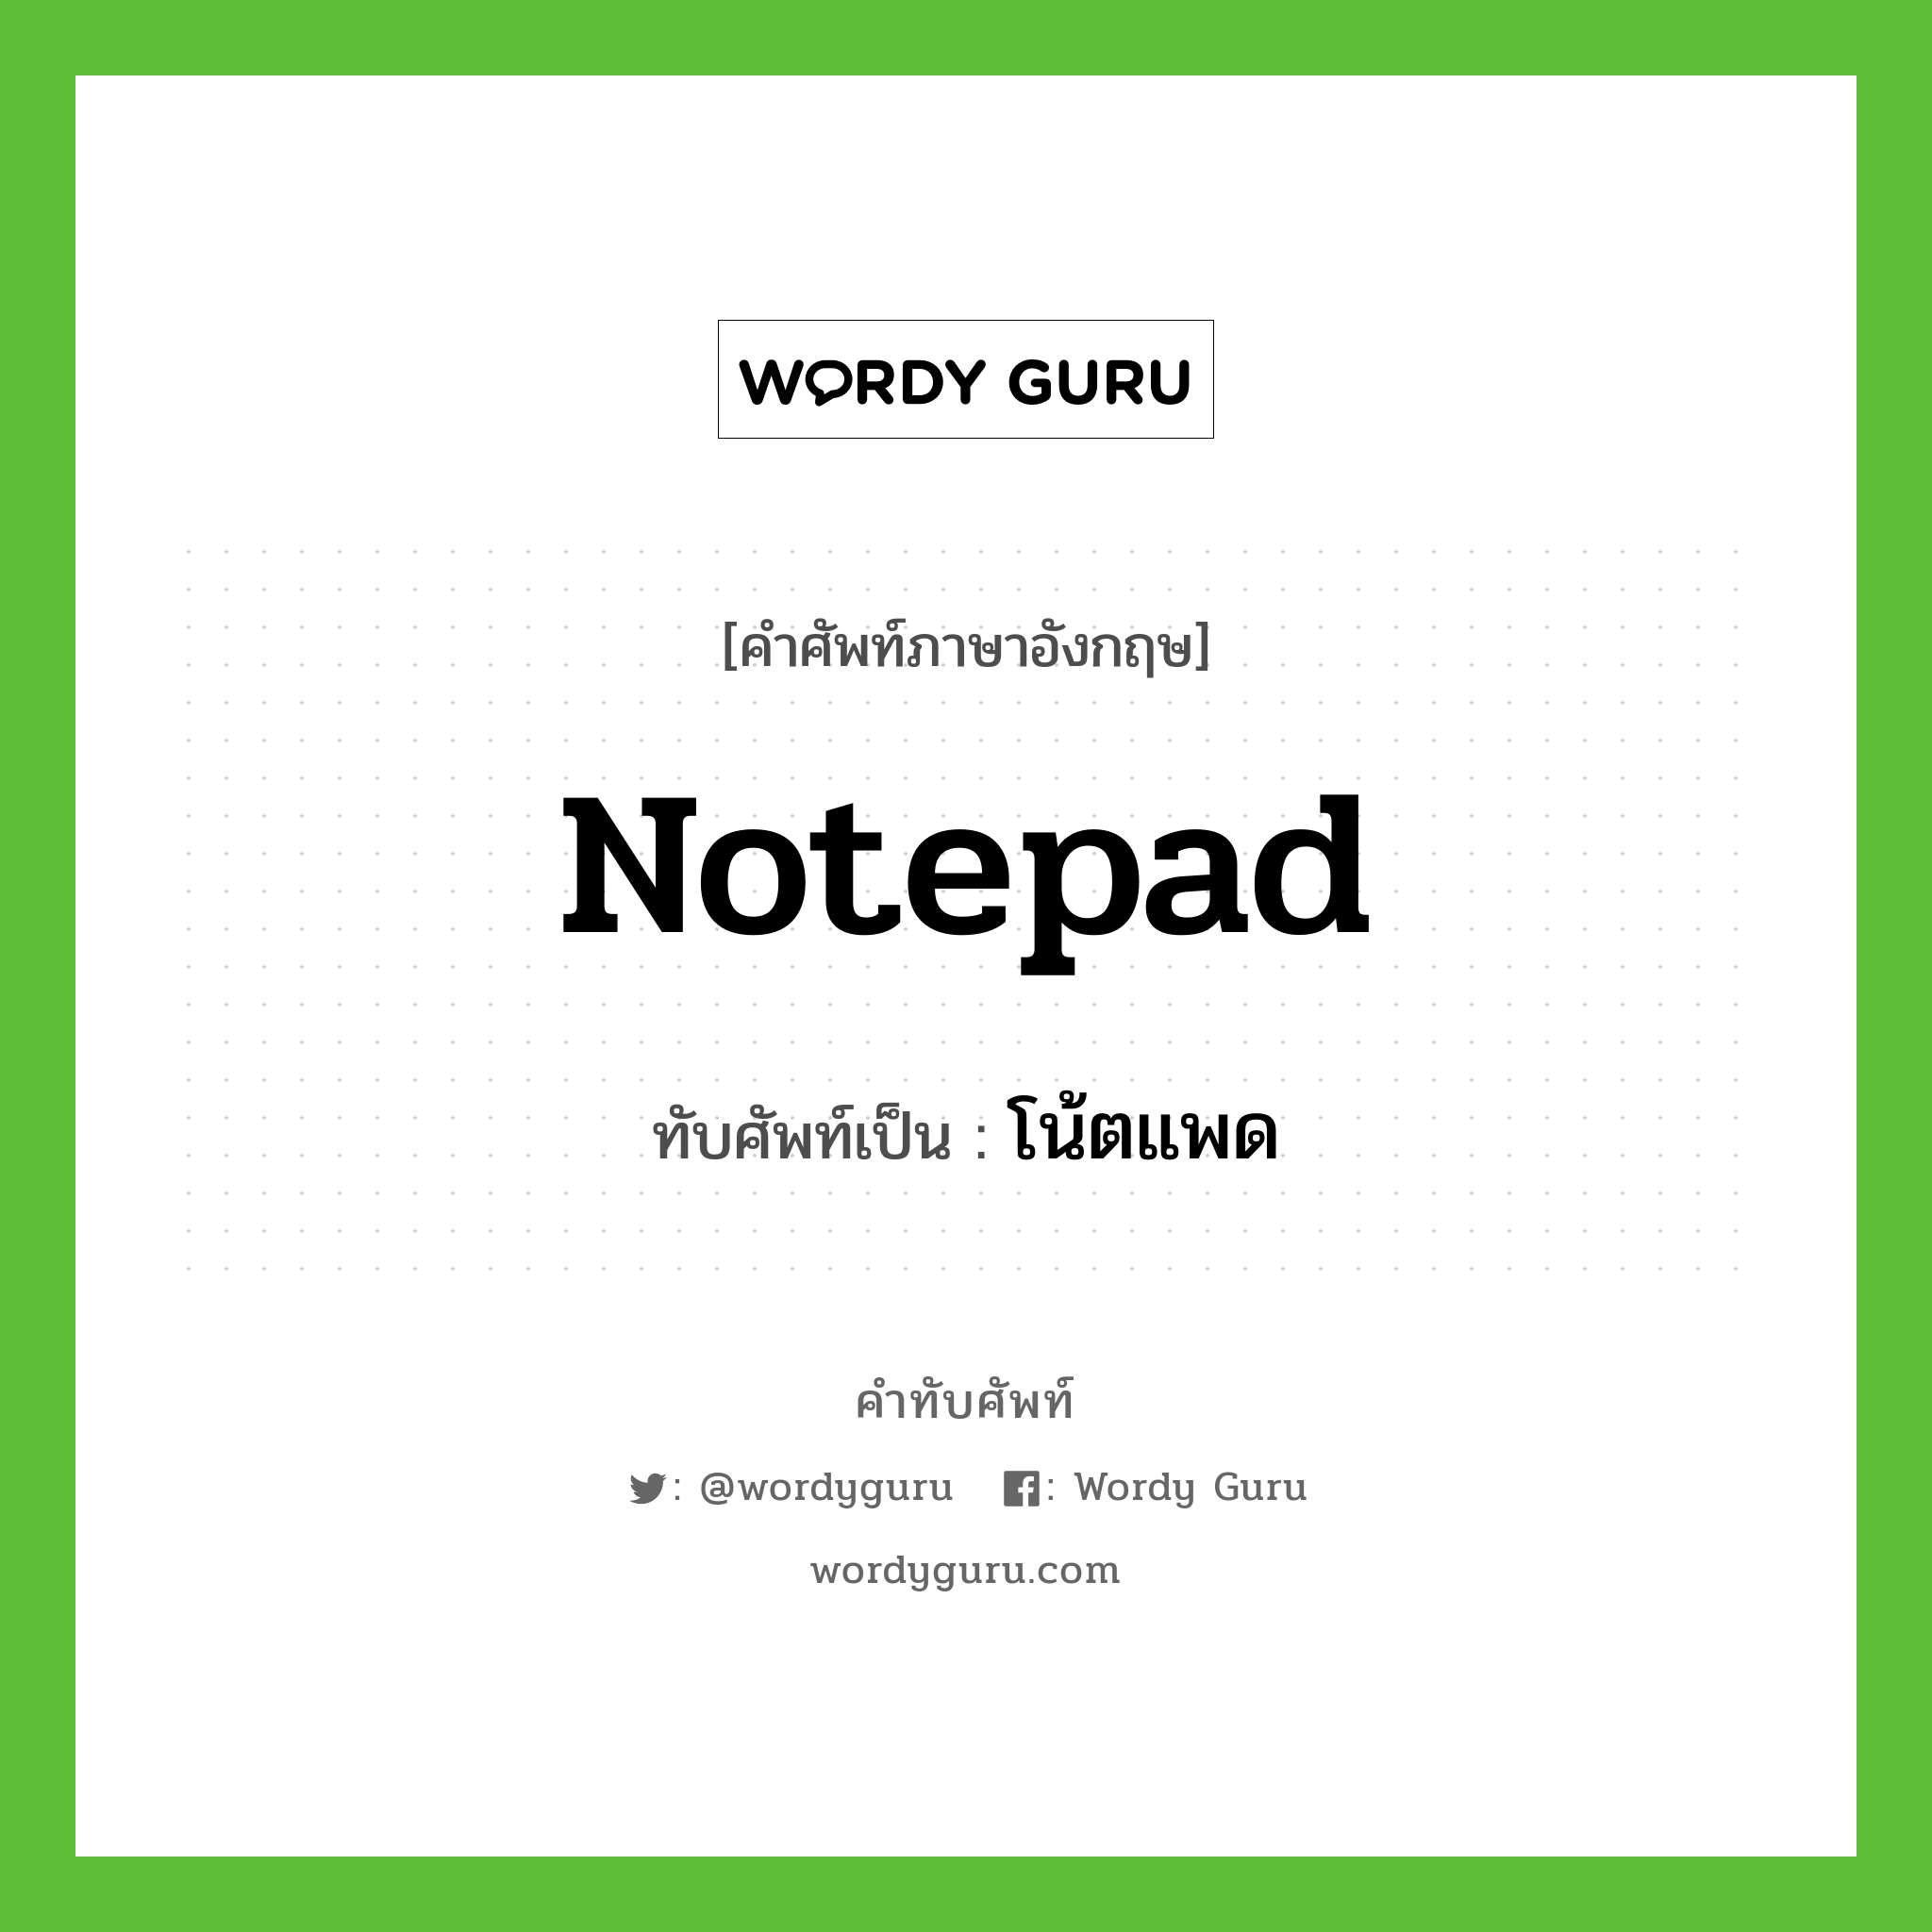 notepad เขียนเป็นคำไทยว่าอะไร?, คำศัพท์ภาษาอังกฤษ notepad ทับศัพท์เป็น โน้ตแพด